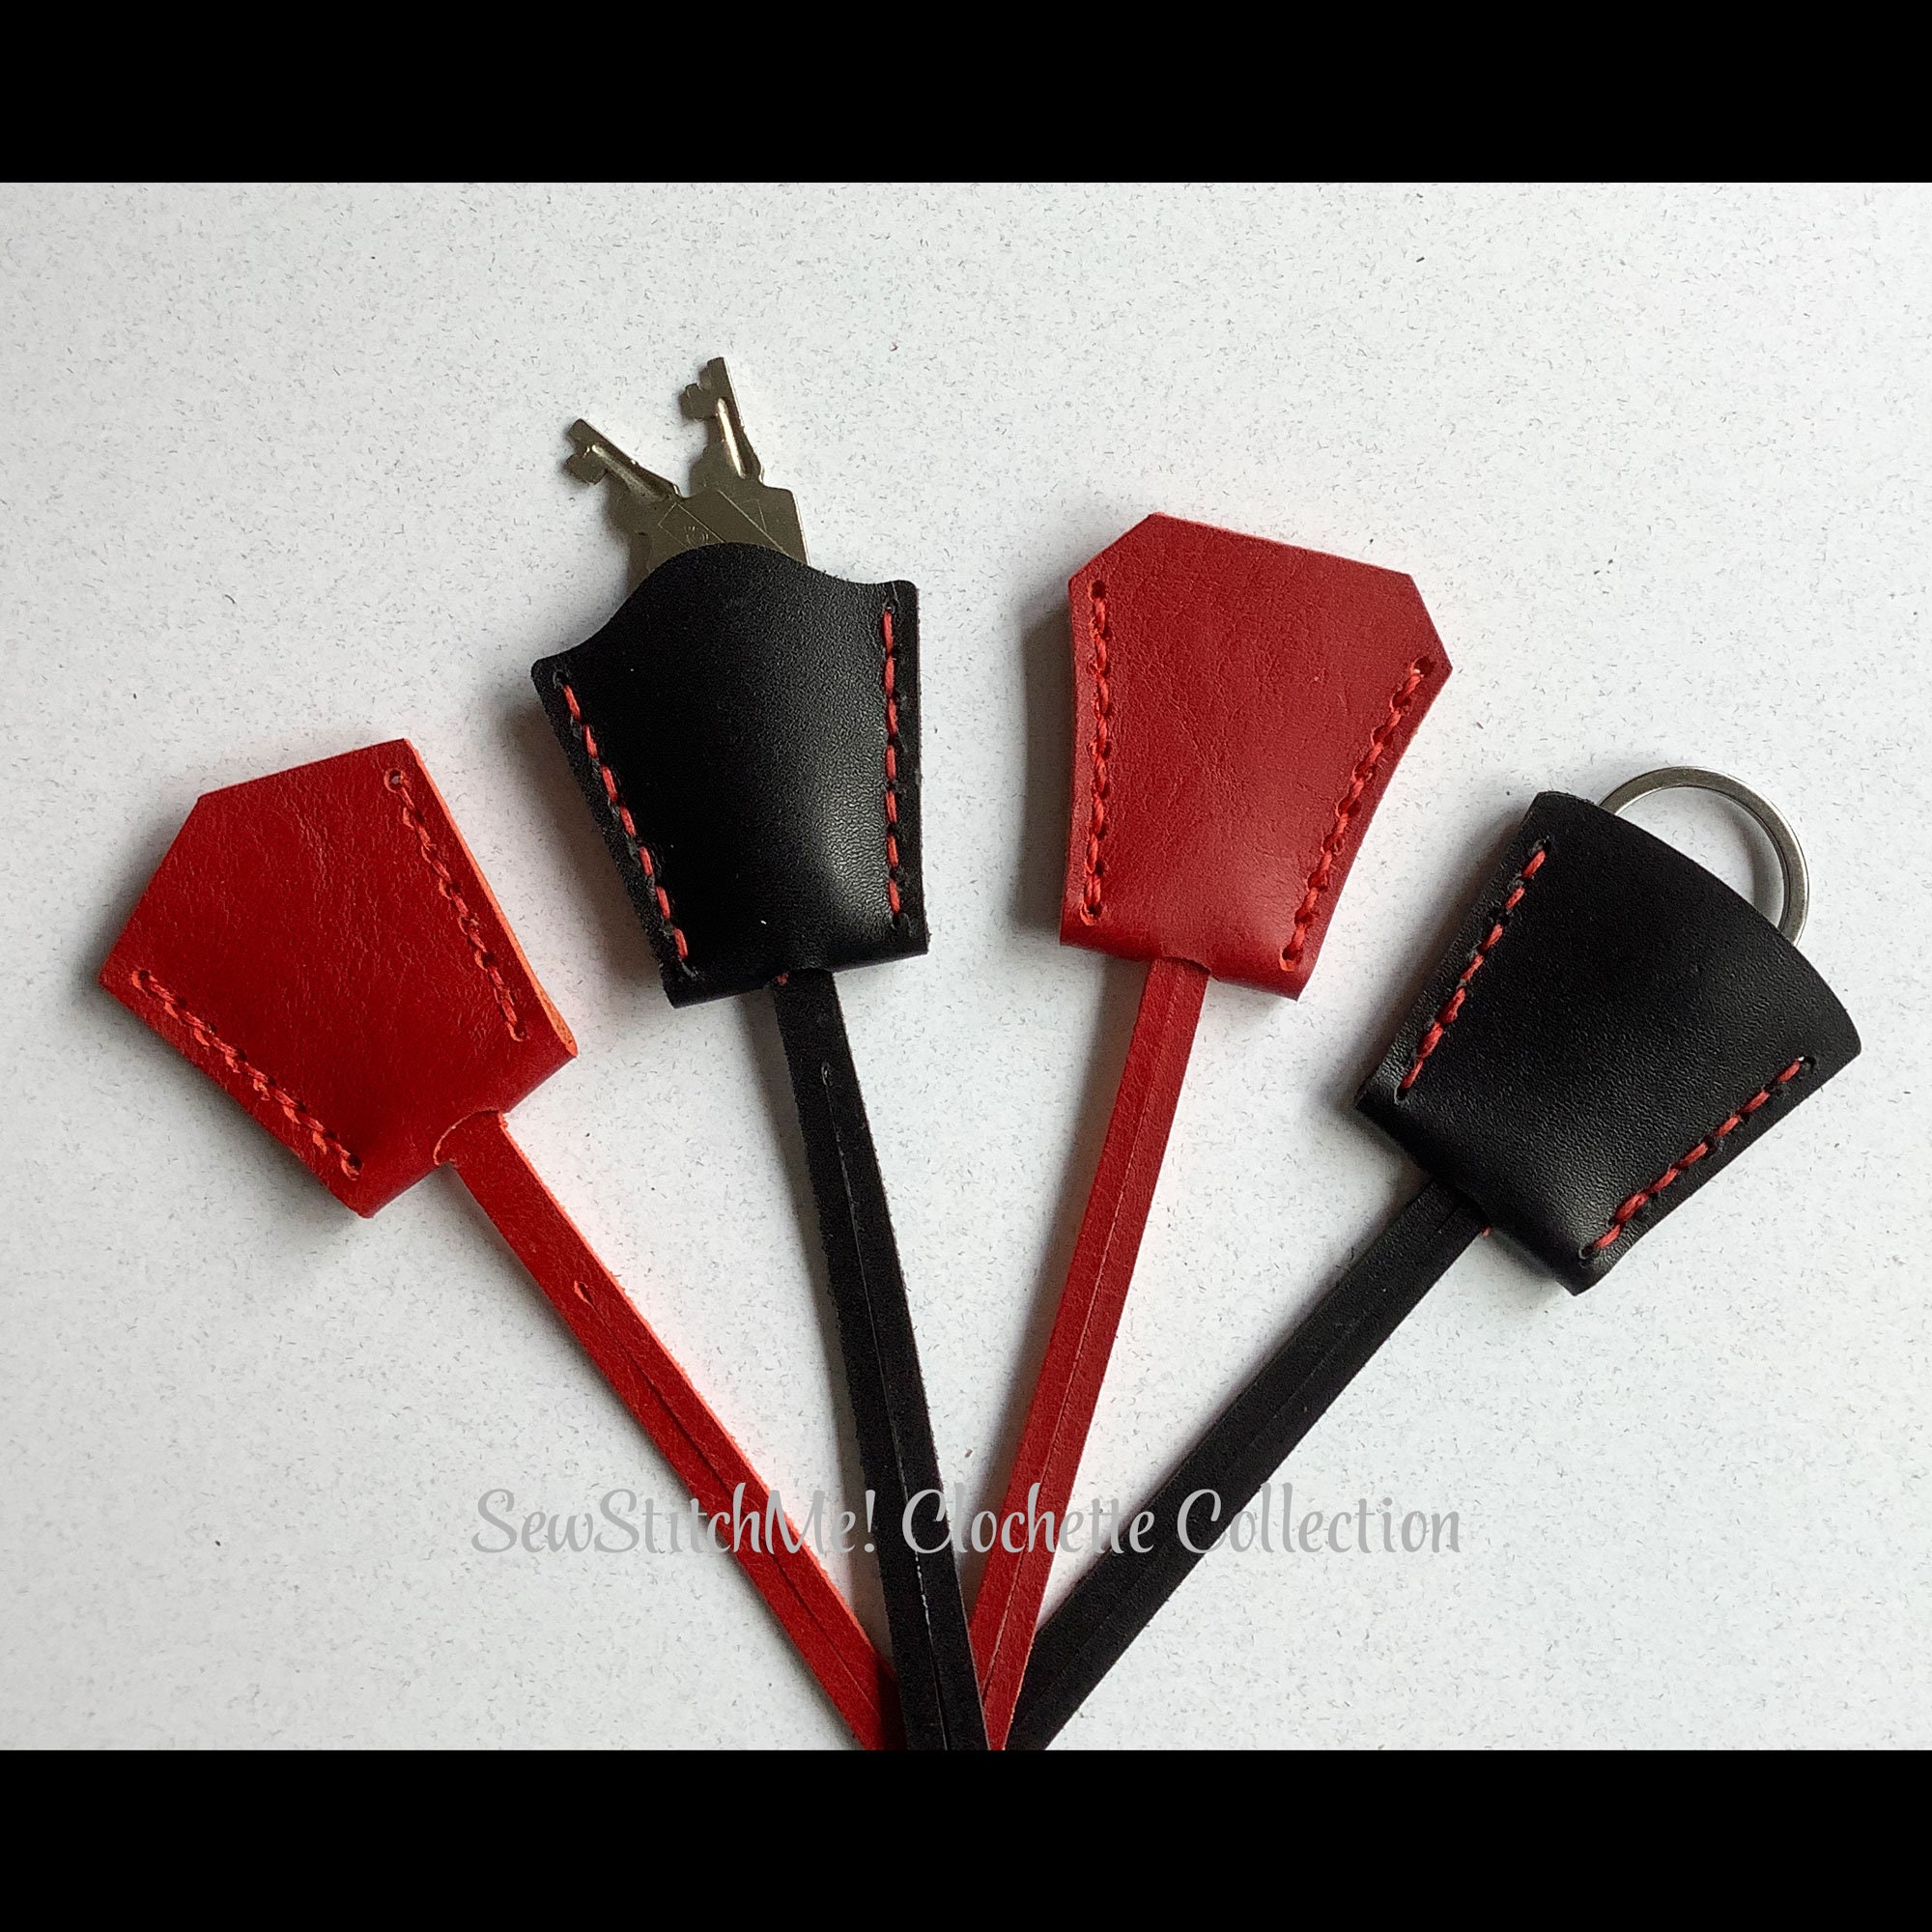 dressupyourpurse Genuine Leather Clochette Key Bell Bag Charm - Hotstamping Available Brown Ebene